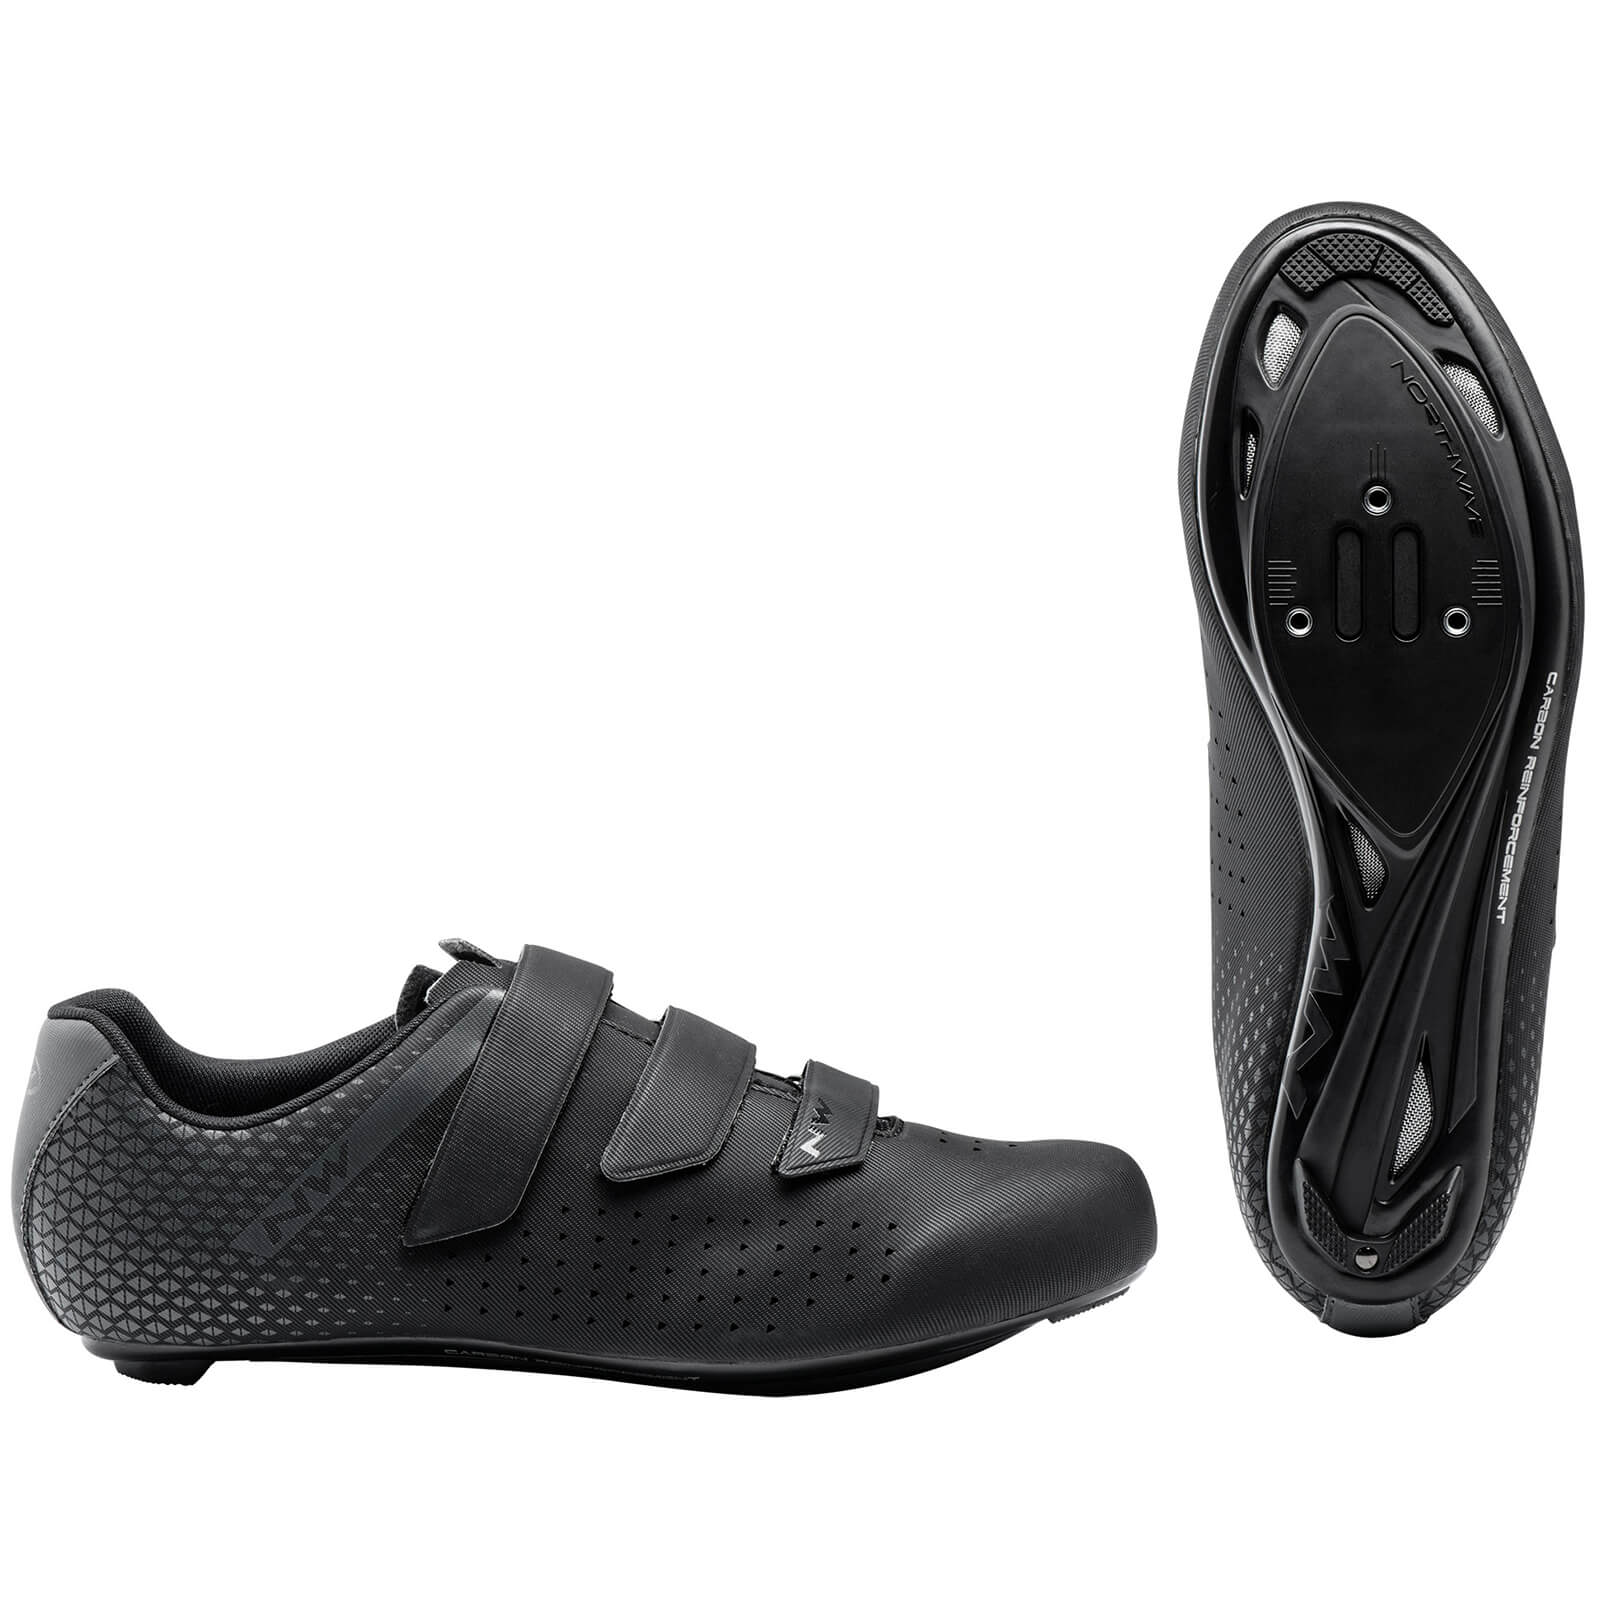 Northwave Core 2 Road Shoes - EU43 - Black/Anthra